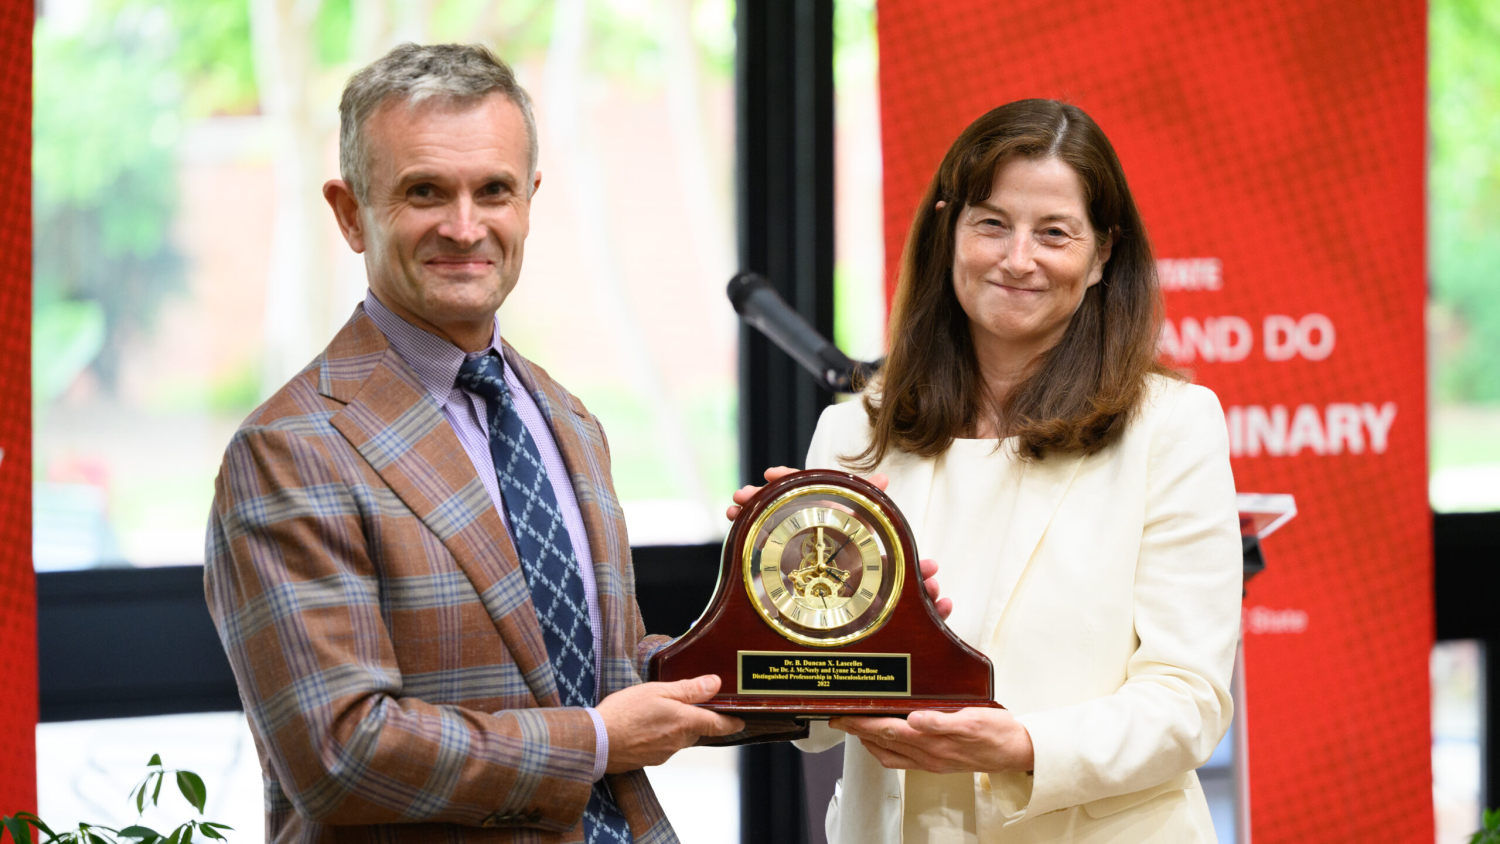 Dr. Lascelles receives award